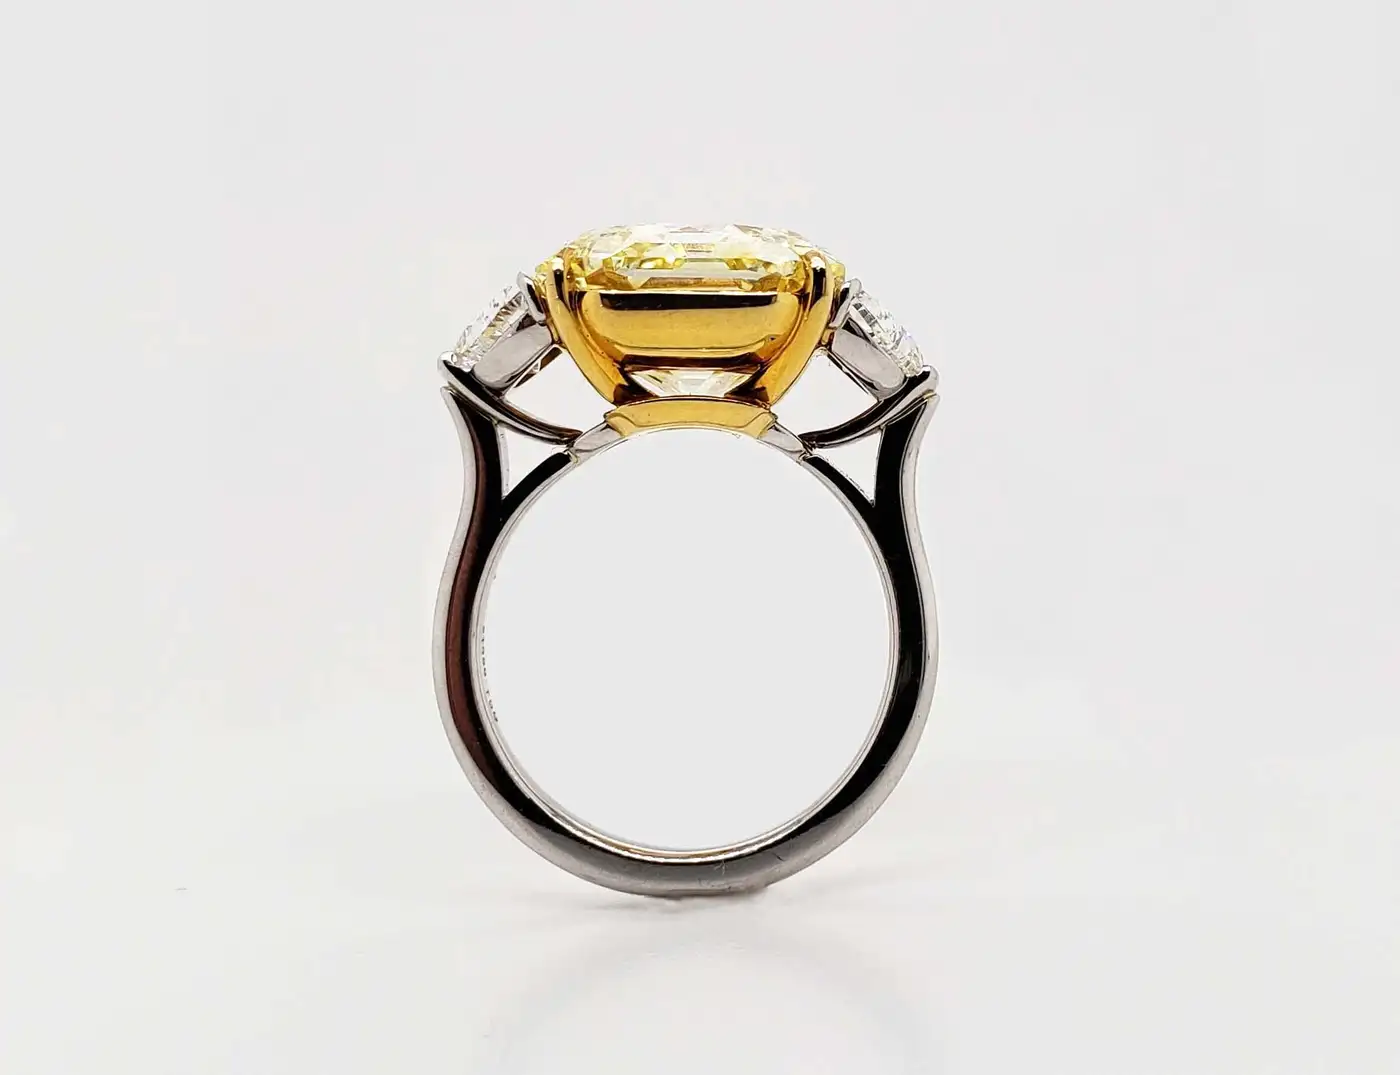 Scarselli-10-Carat-Fancy-Intense-Yellow-Internally-Flawless-Radiant-Diamond-Ring-4.webp